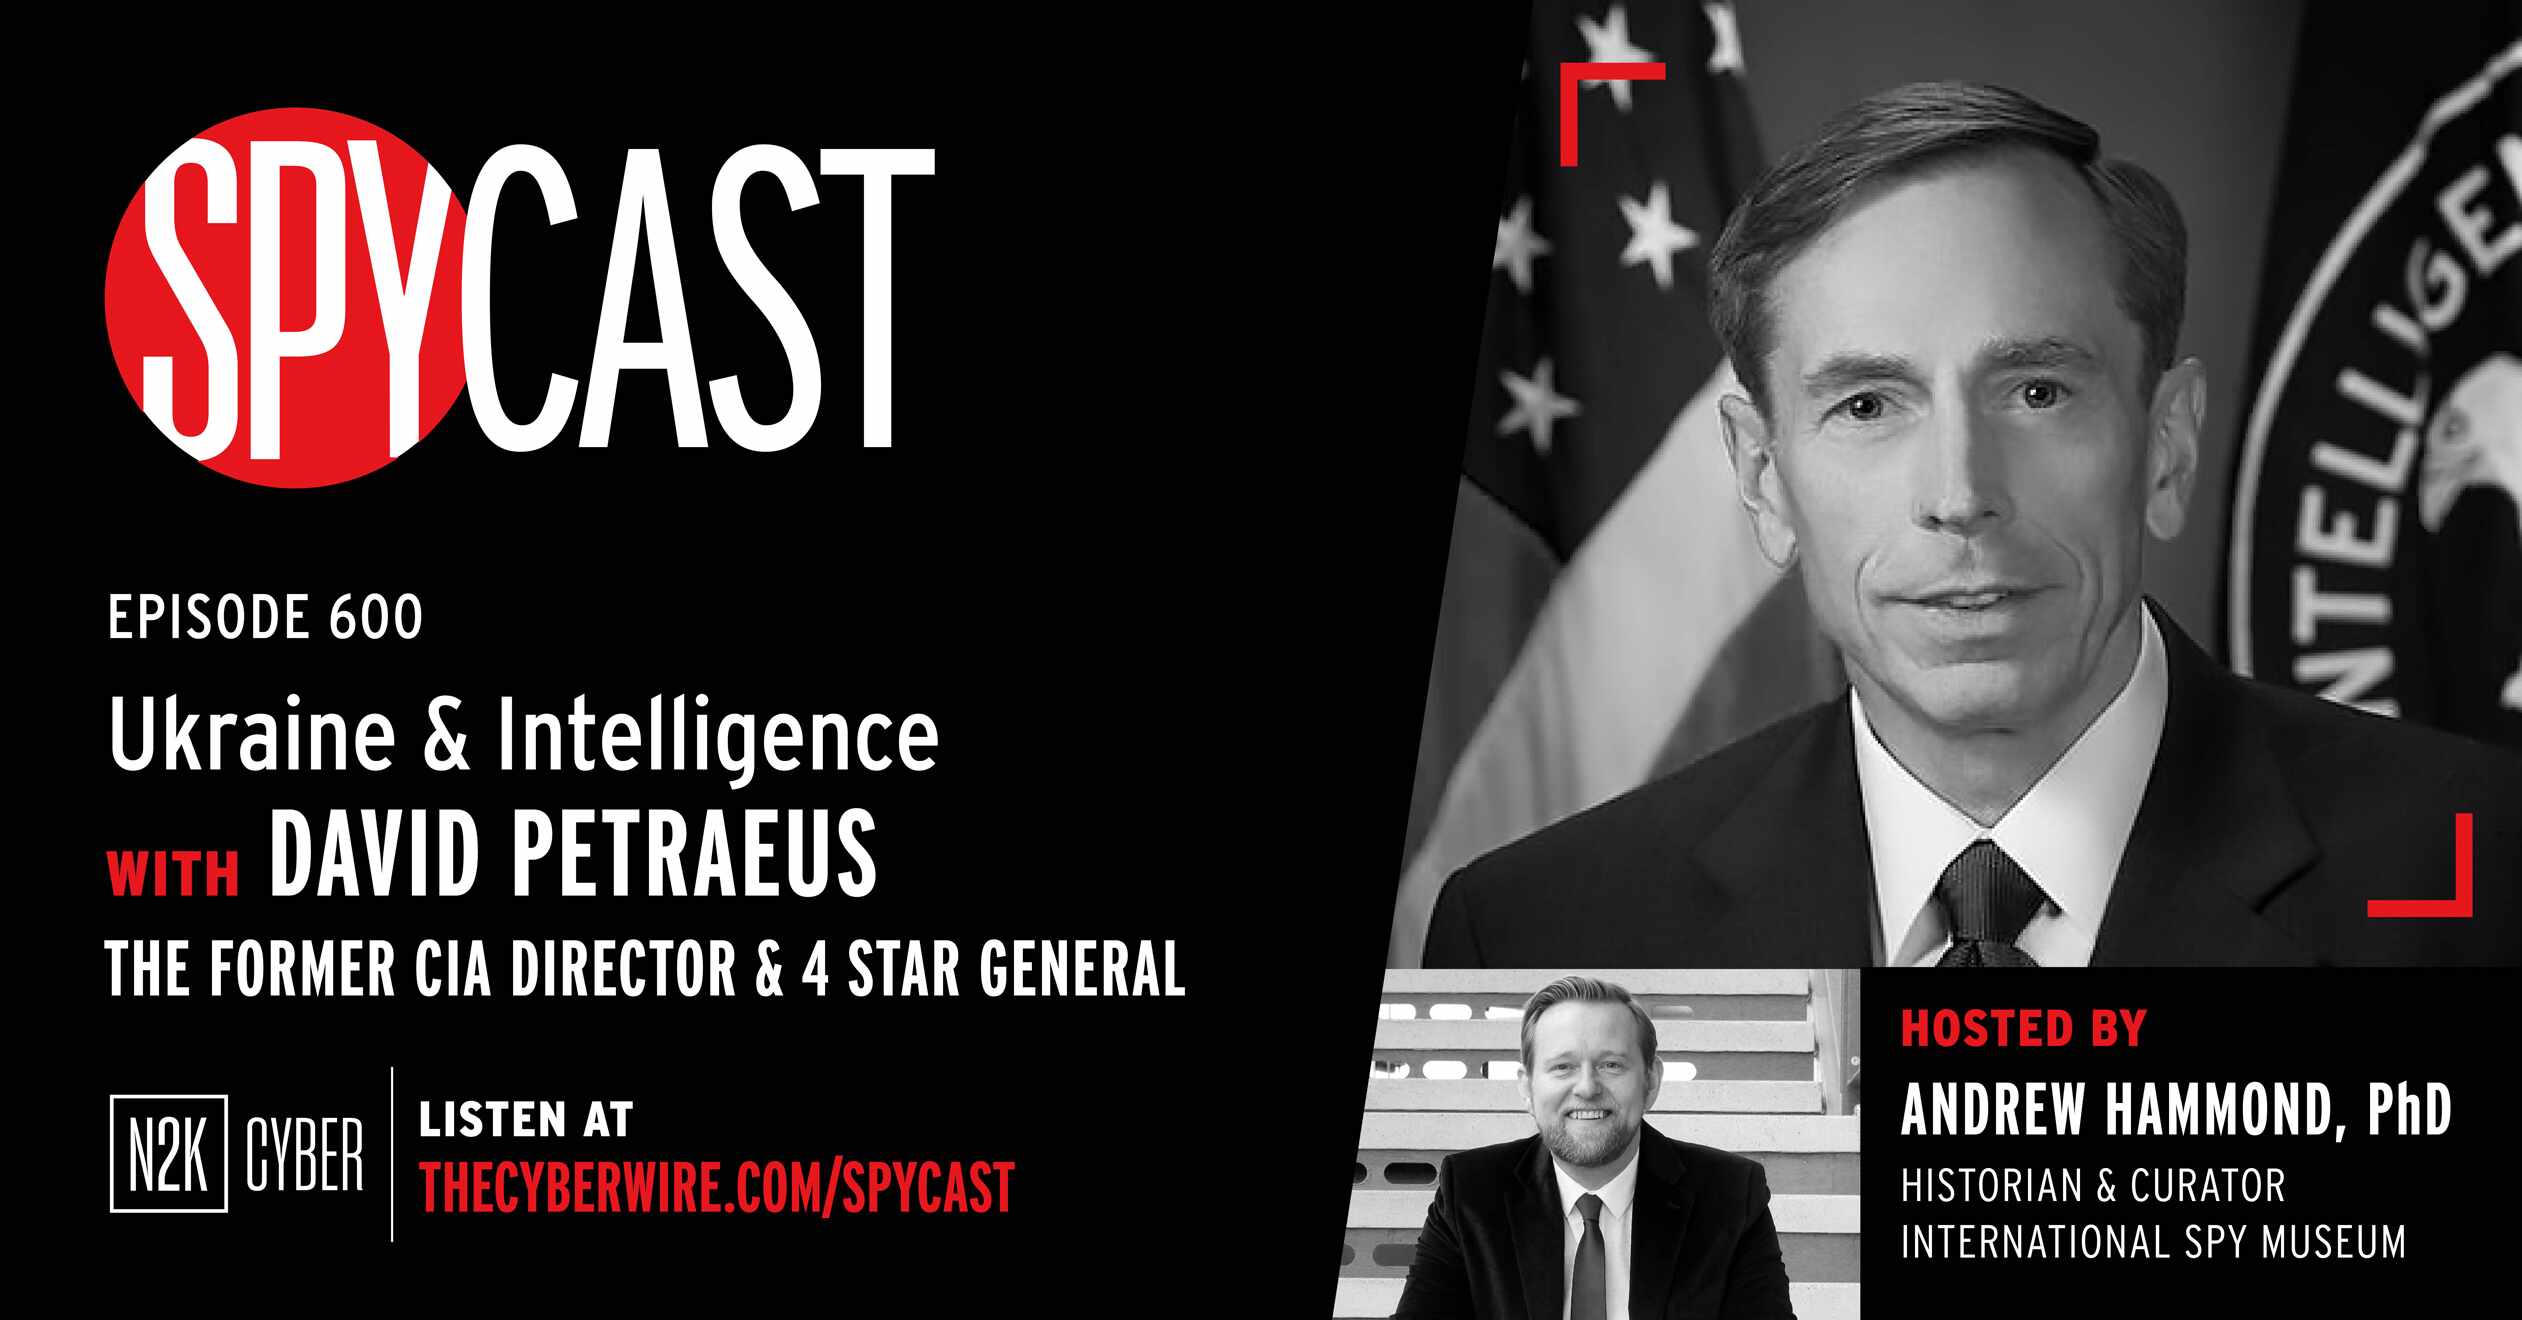 “David Petraeus on Ukraine & Intelligence” – with the former CIA Director & 4* General